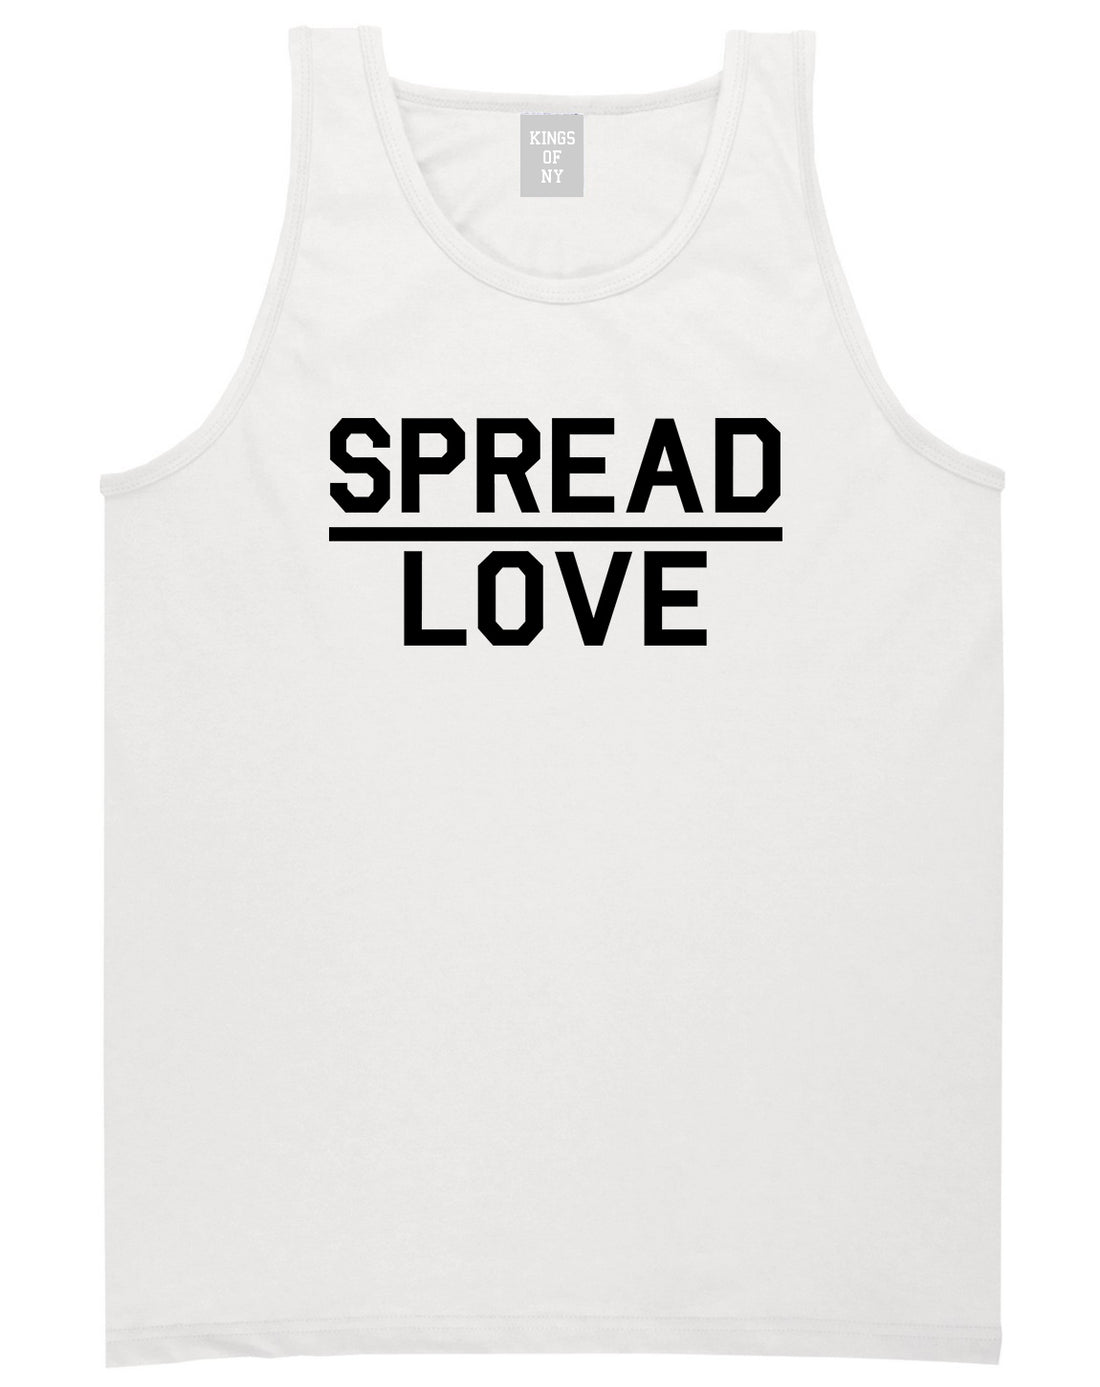 Spread Love Brooklyn Tank Top Shirt in White